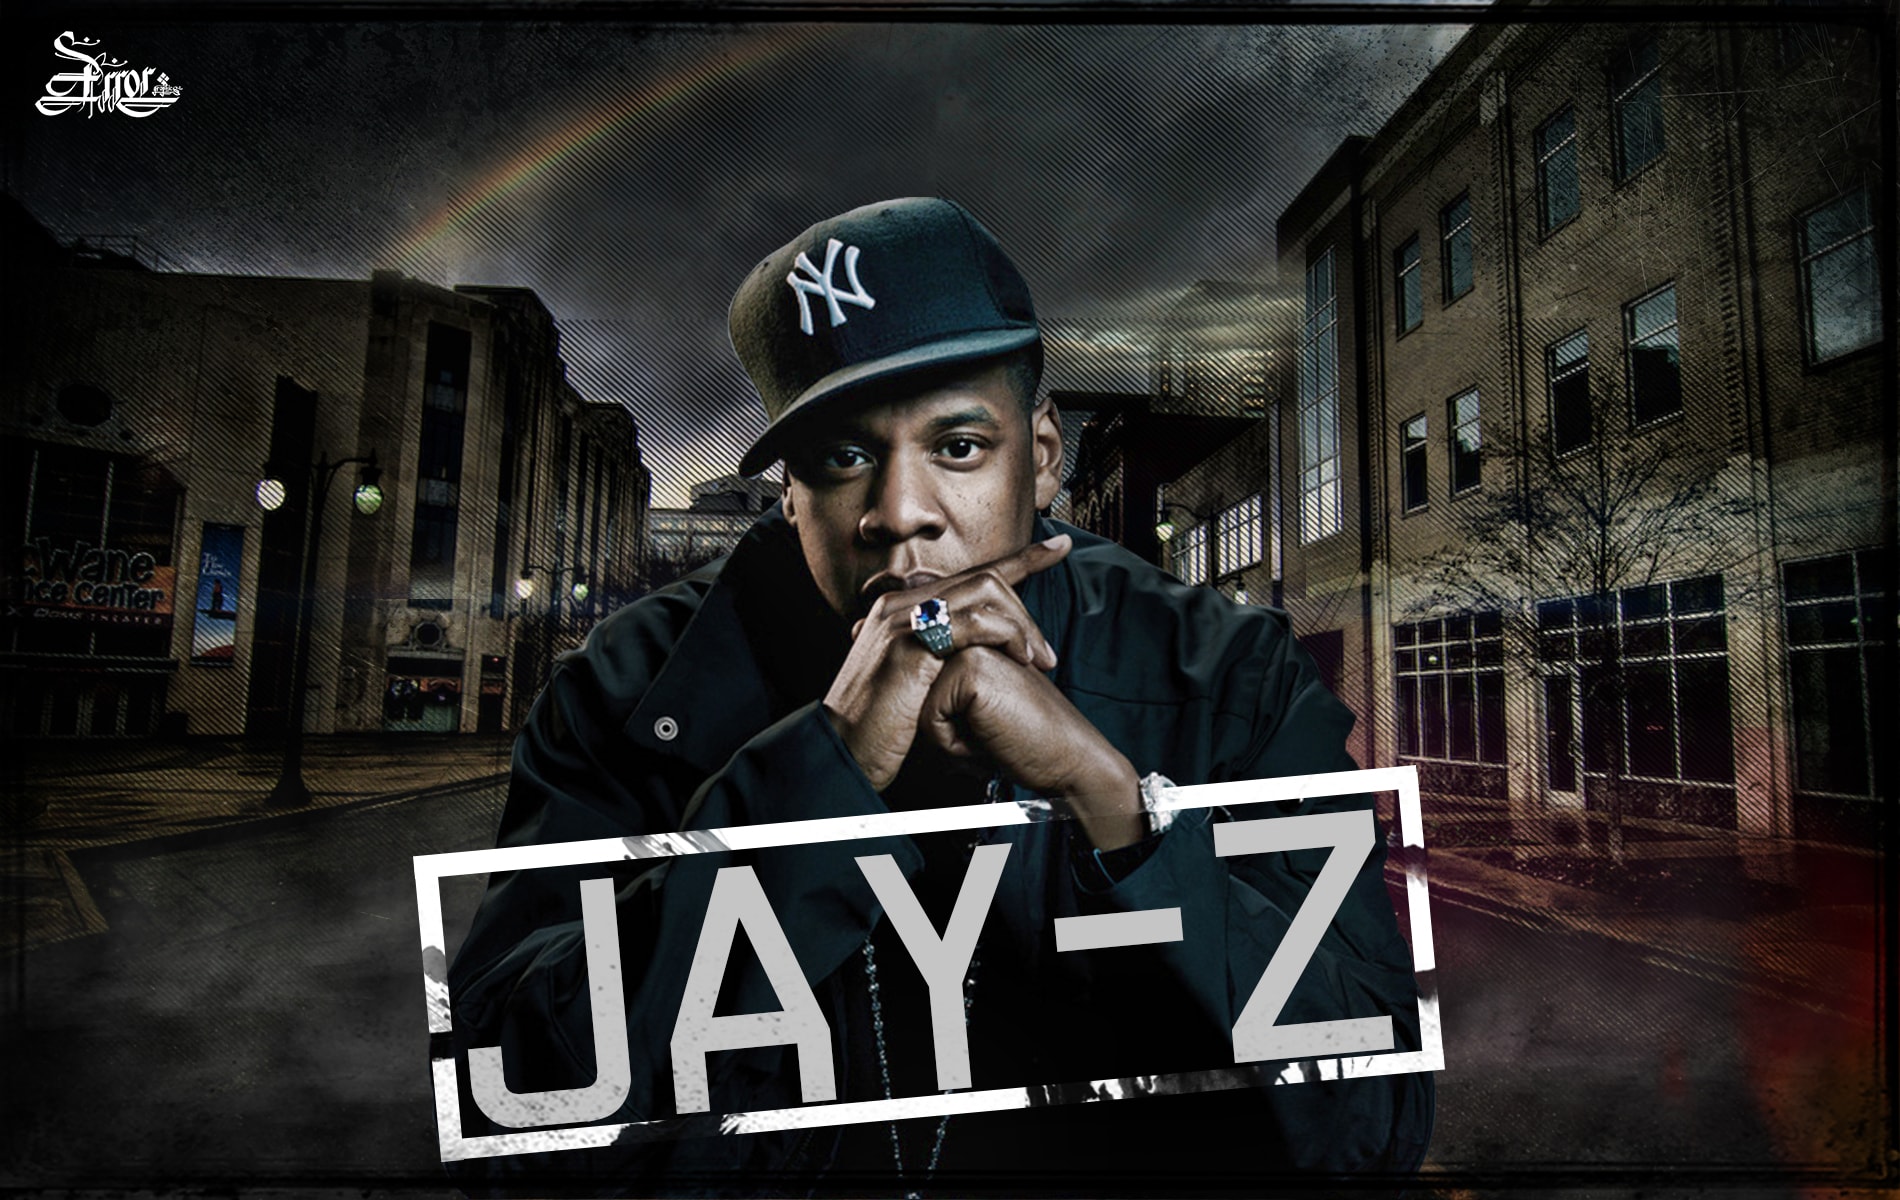 Jay Z Wallpaper X